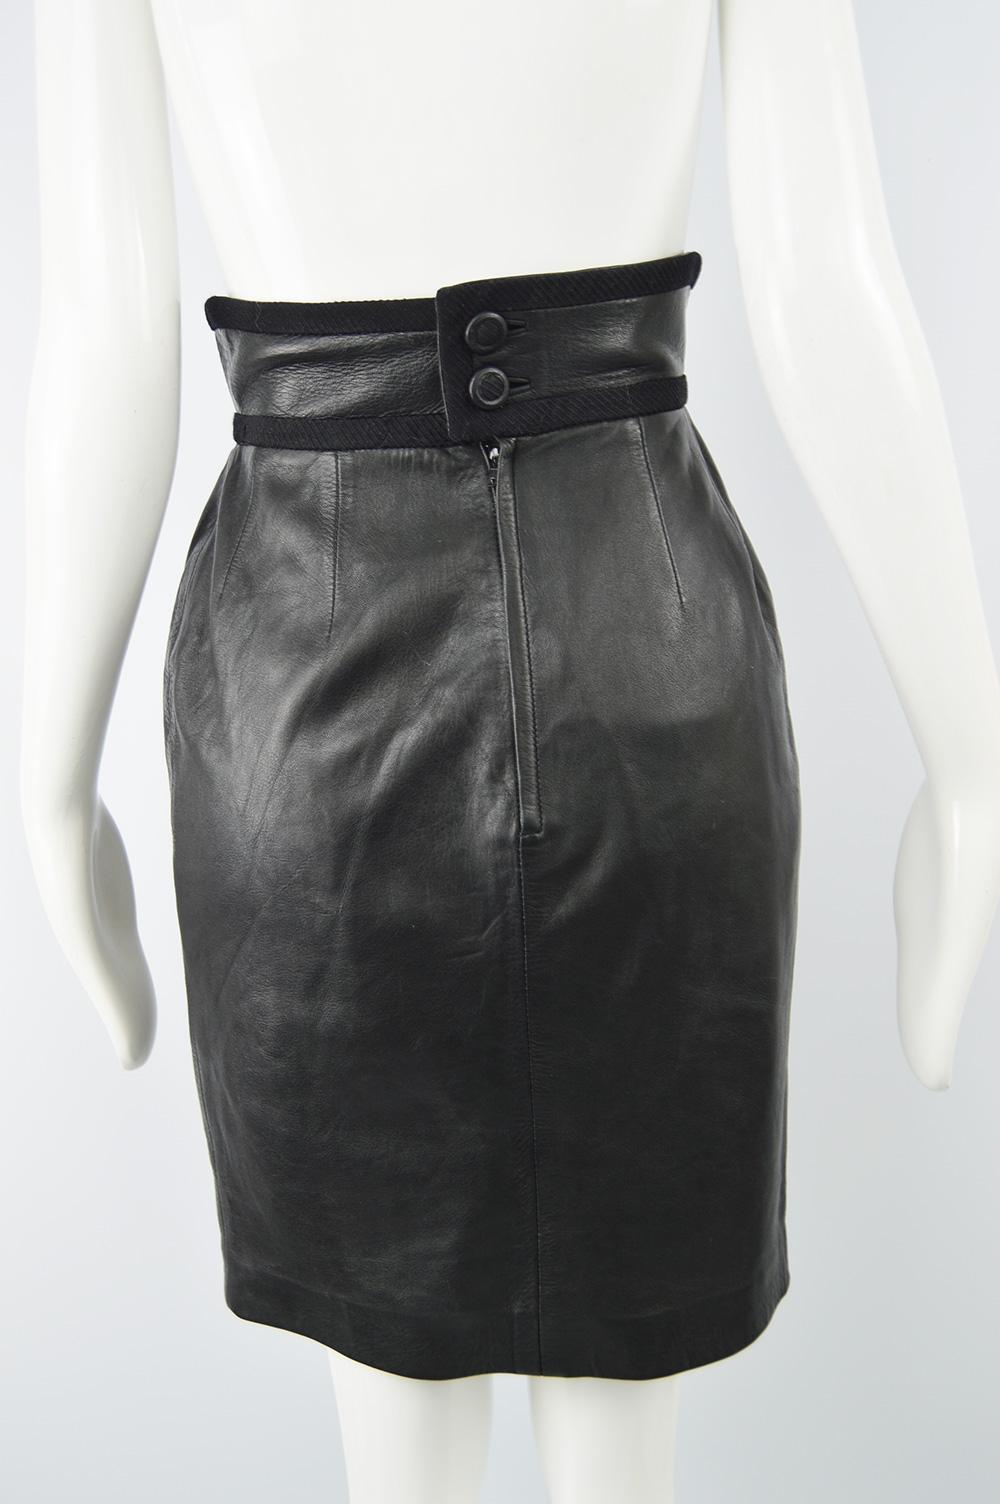 Loewe 1980s Black Leather Ultra High Waist Women's Vintage Pencil Skirt For Sale 1